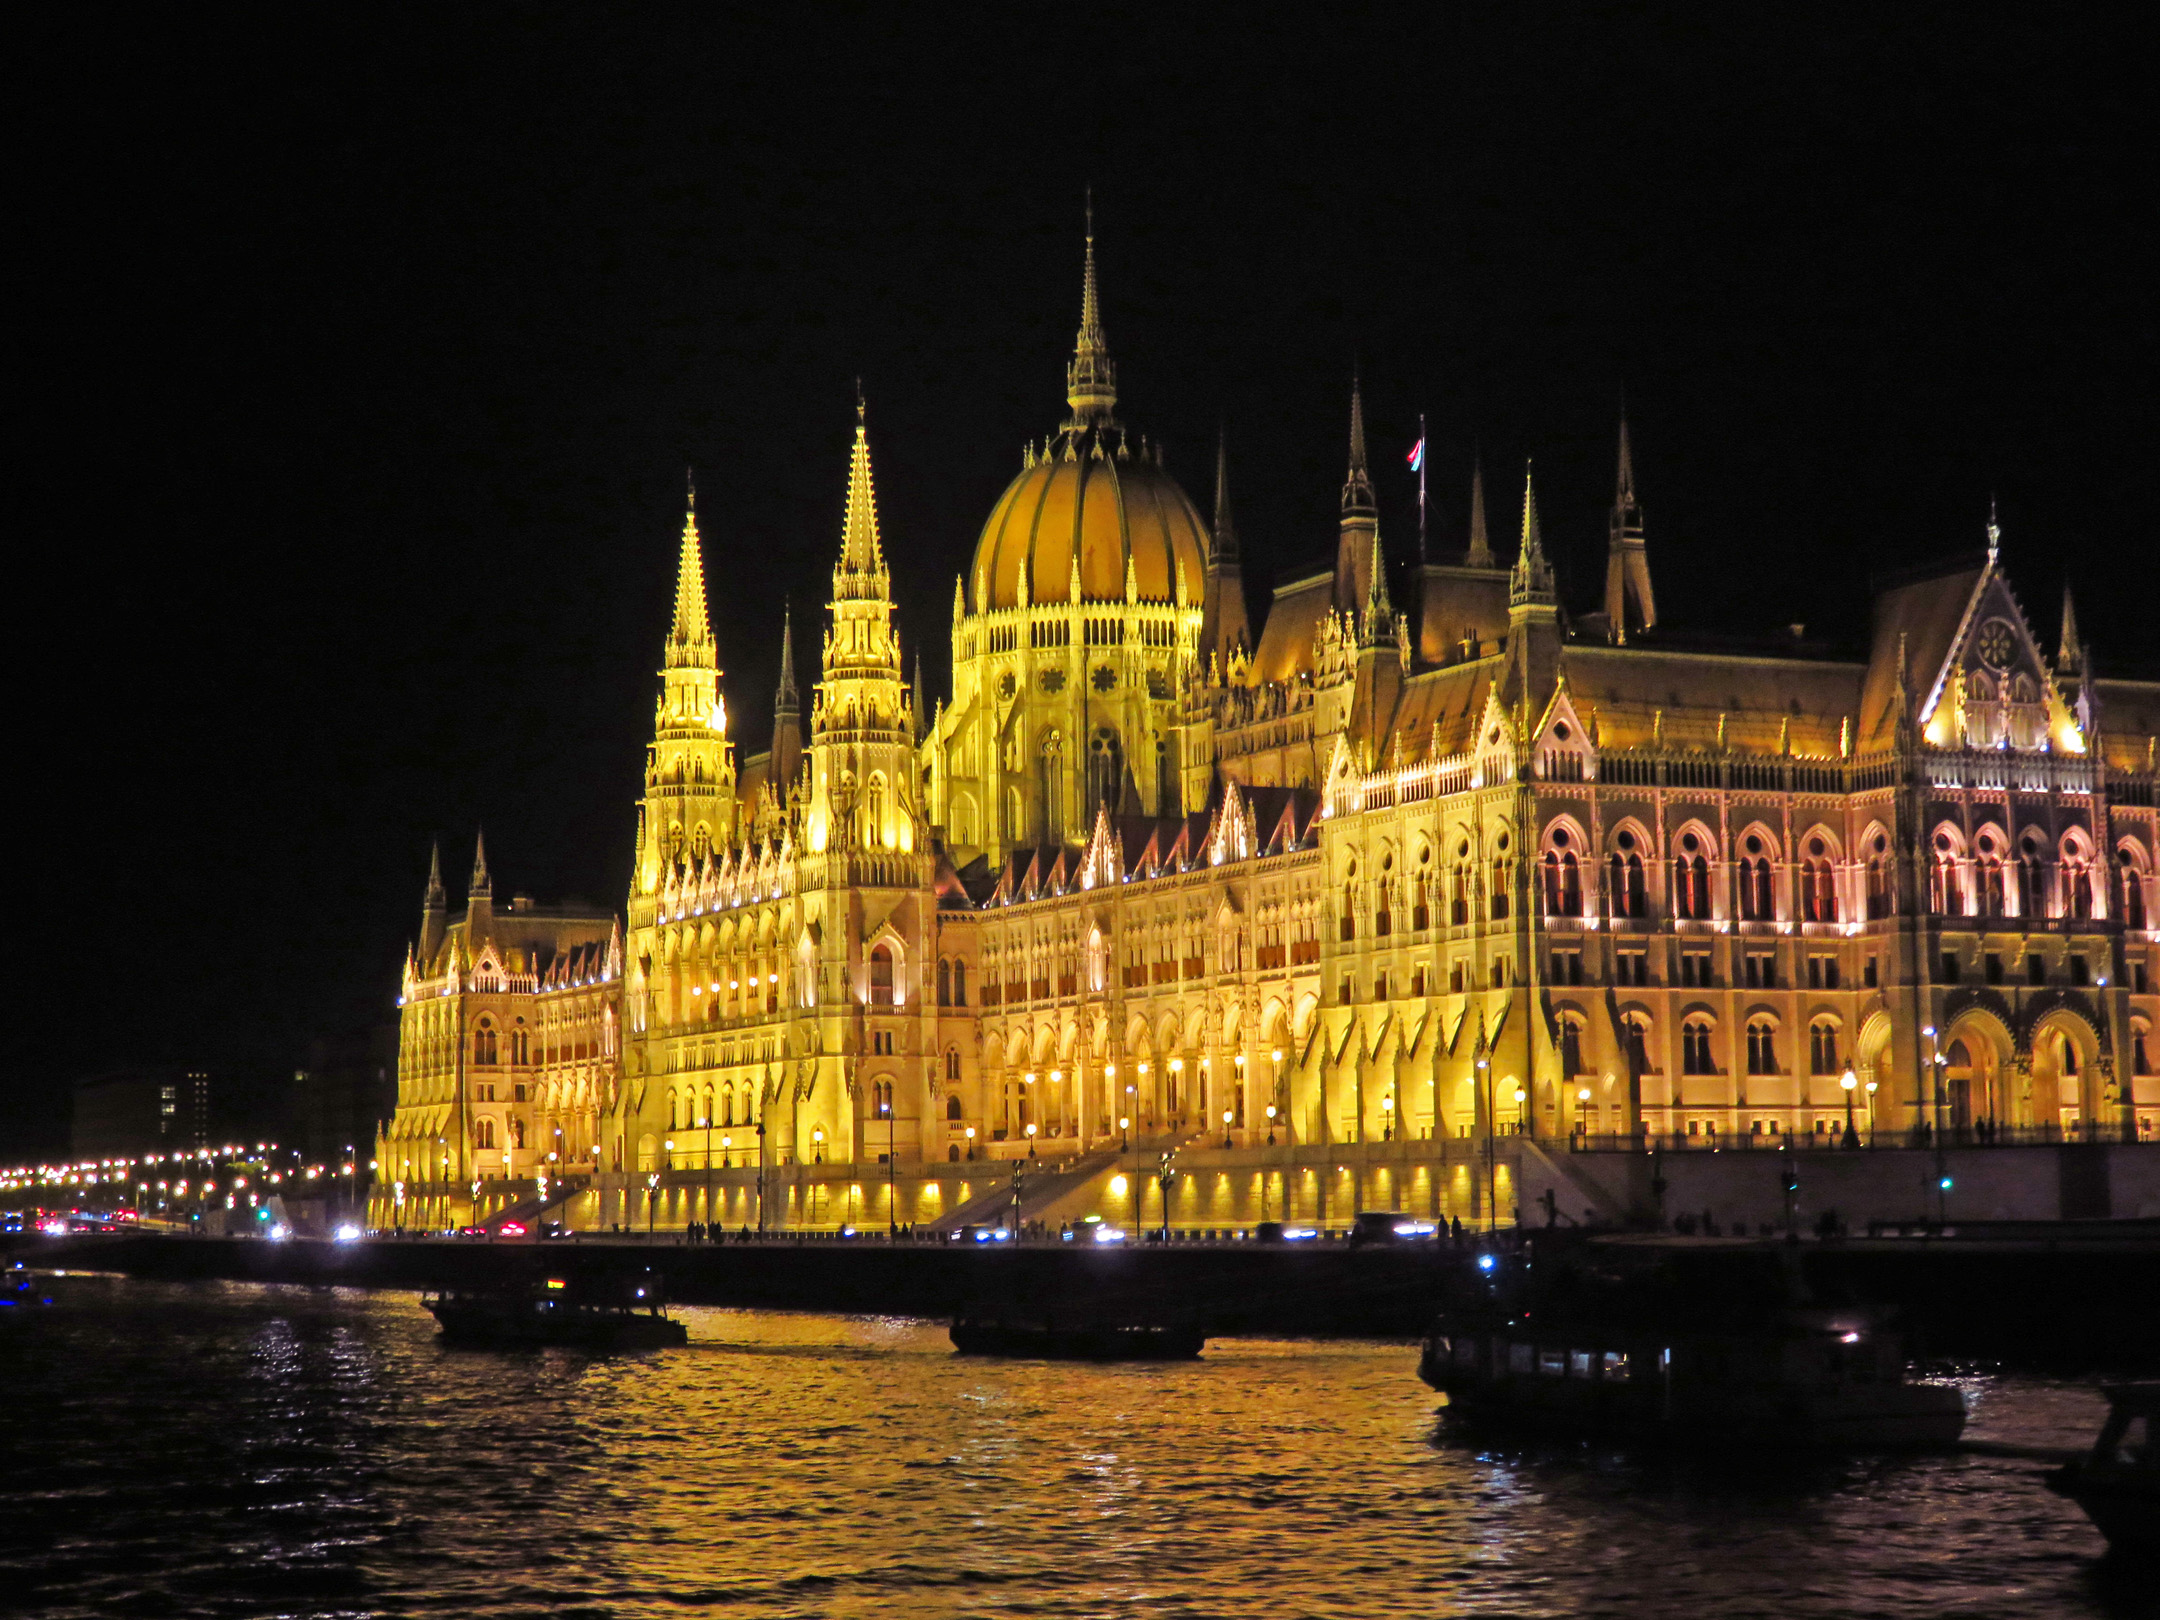 3. Budapest Parliament at night